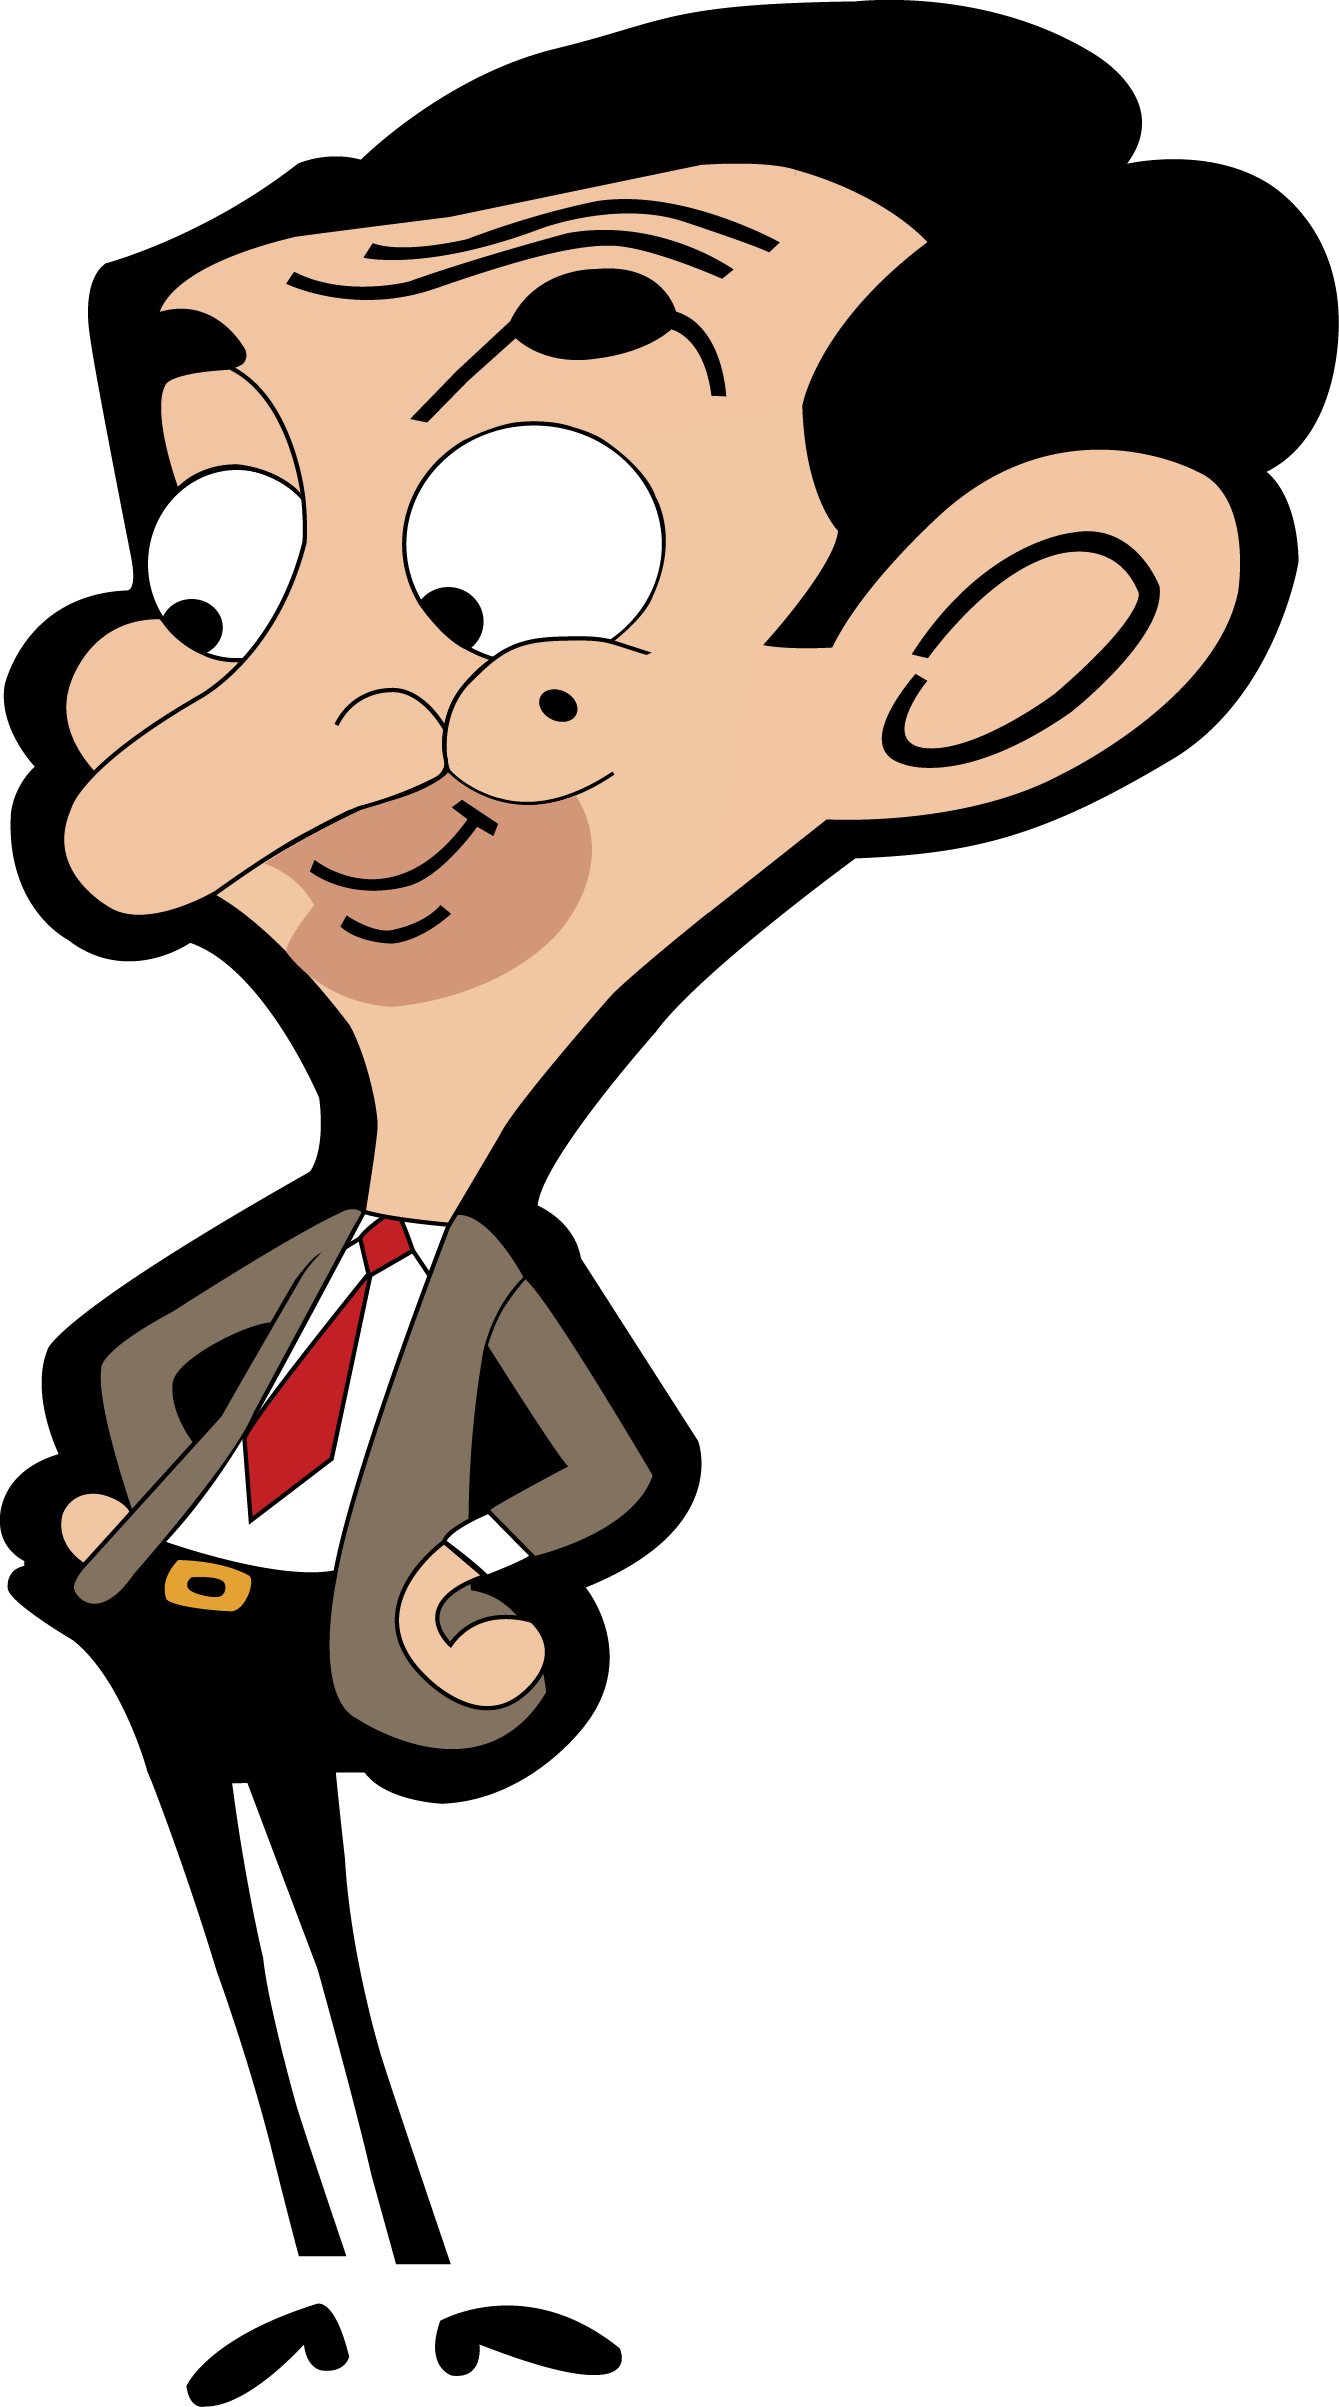 100+] Mr Bean Cartoon Wallpapers | Wallpapers.com